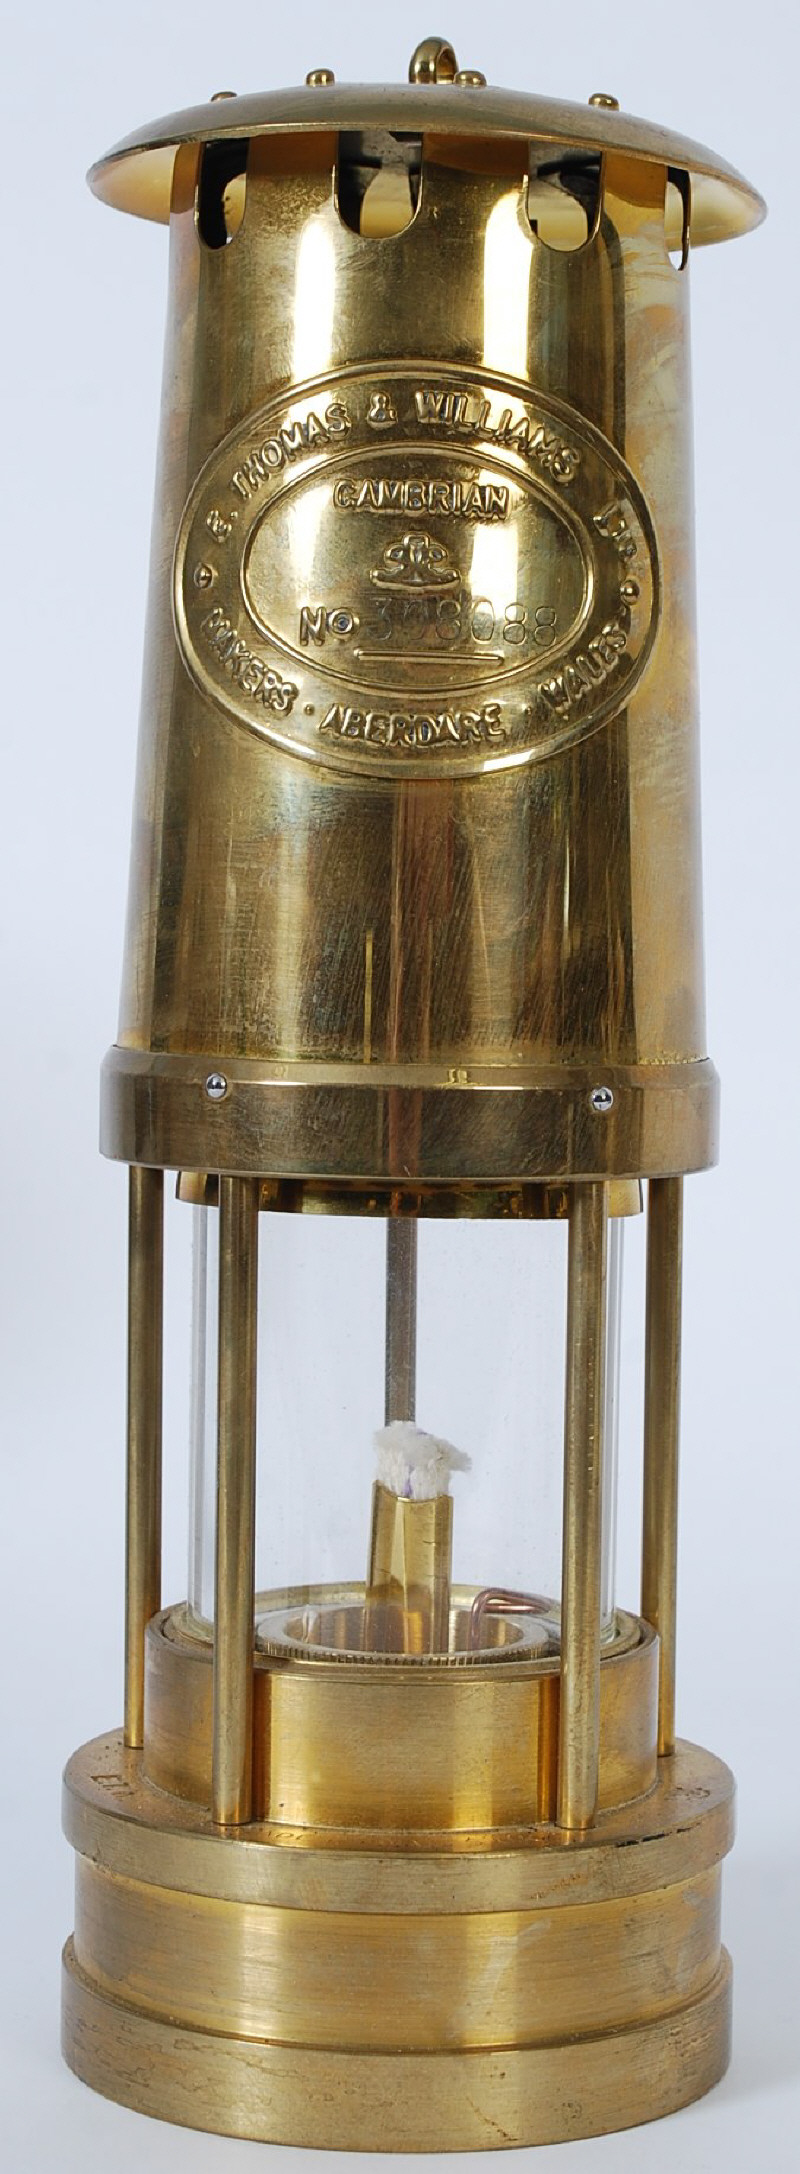 An E Thomas & Williams Ltd, Aberdare, Wales Cambrian brass miners lamp. 308088. 26cm tall.